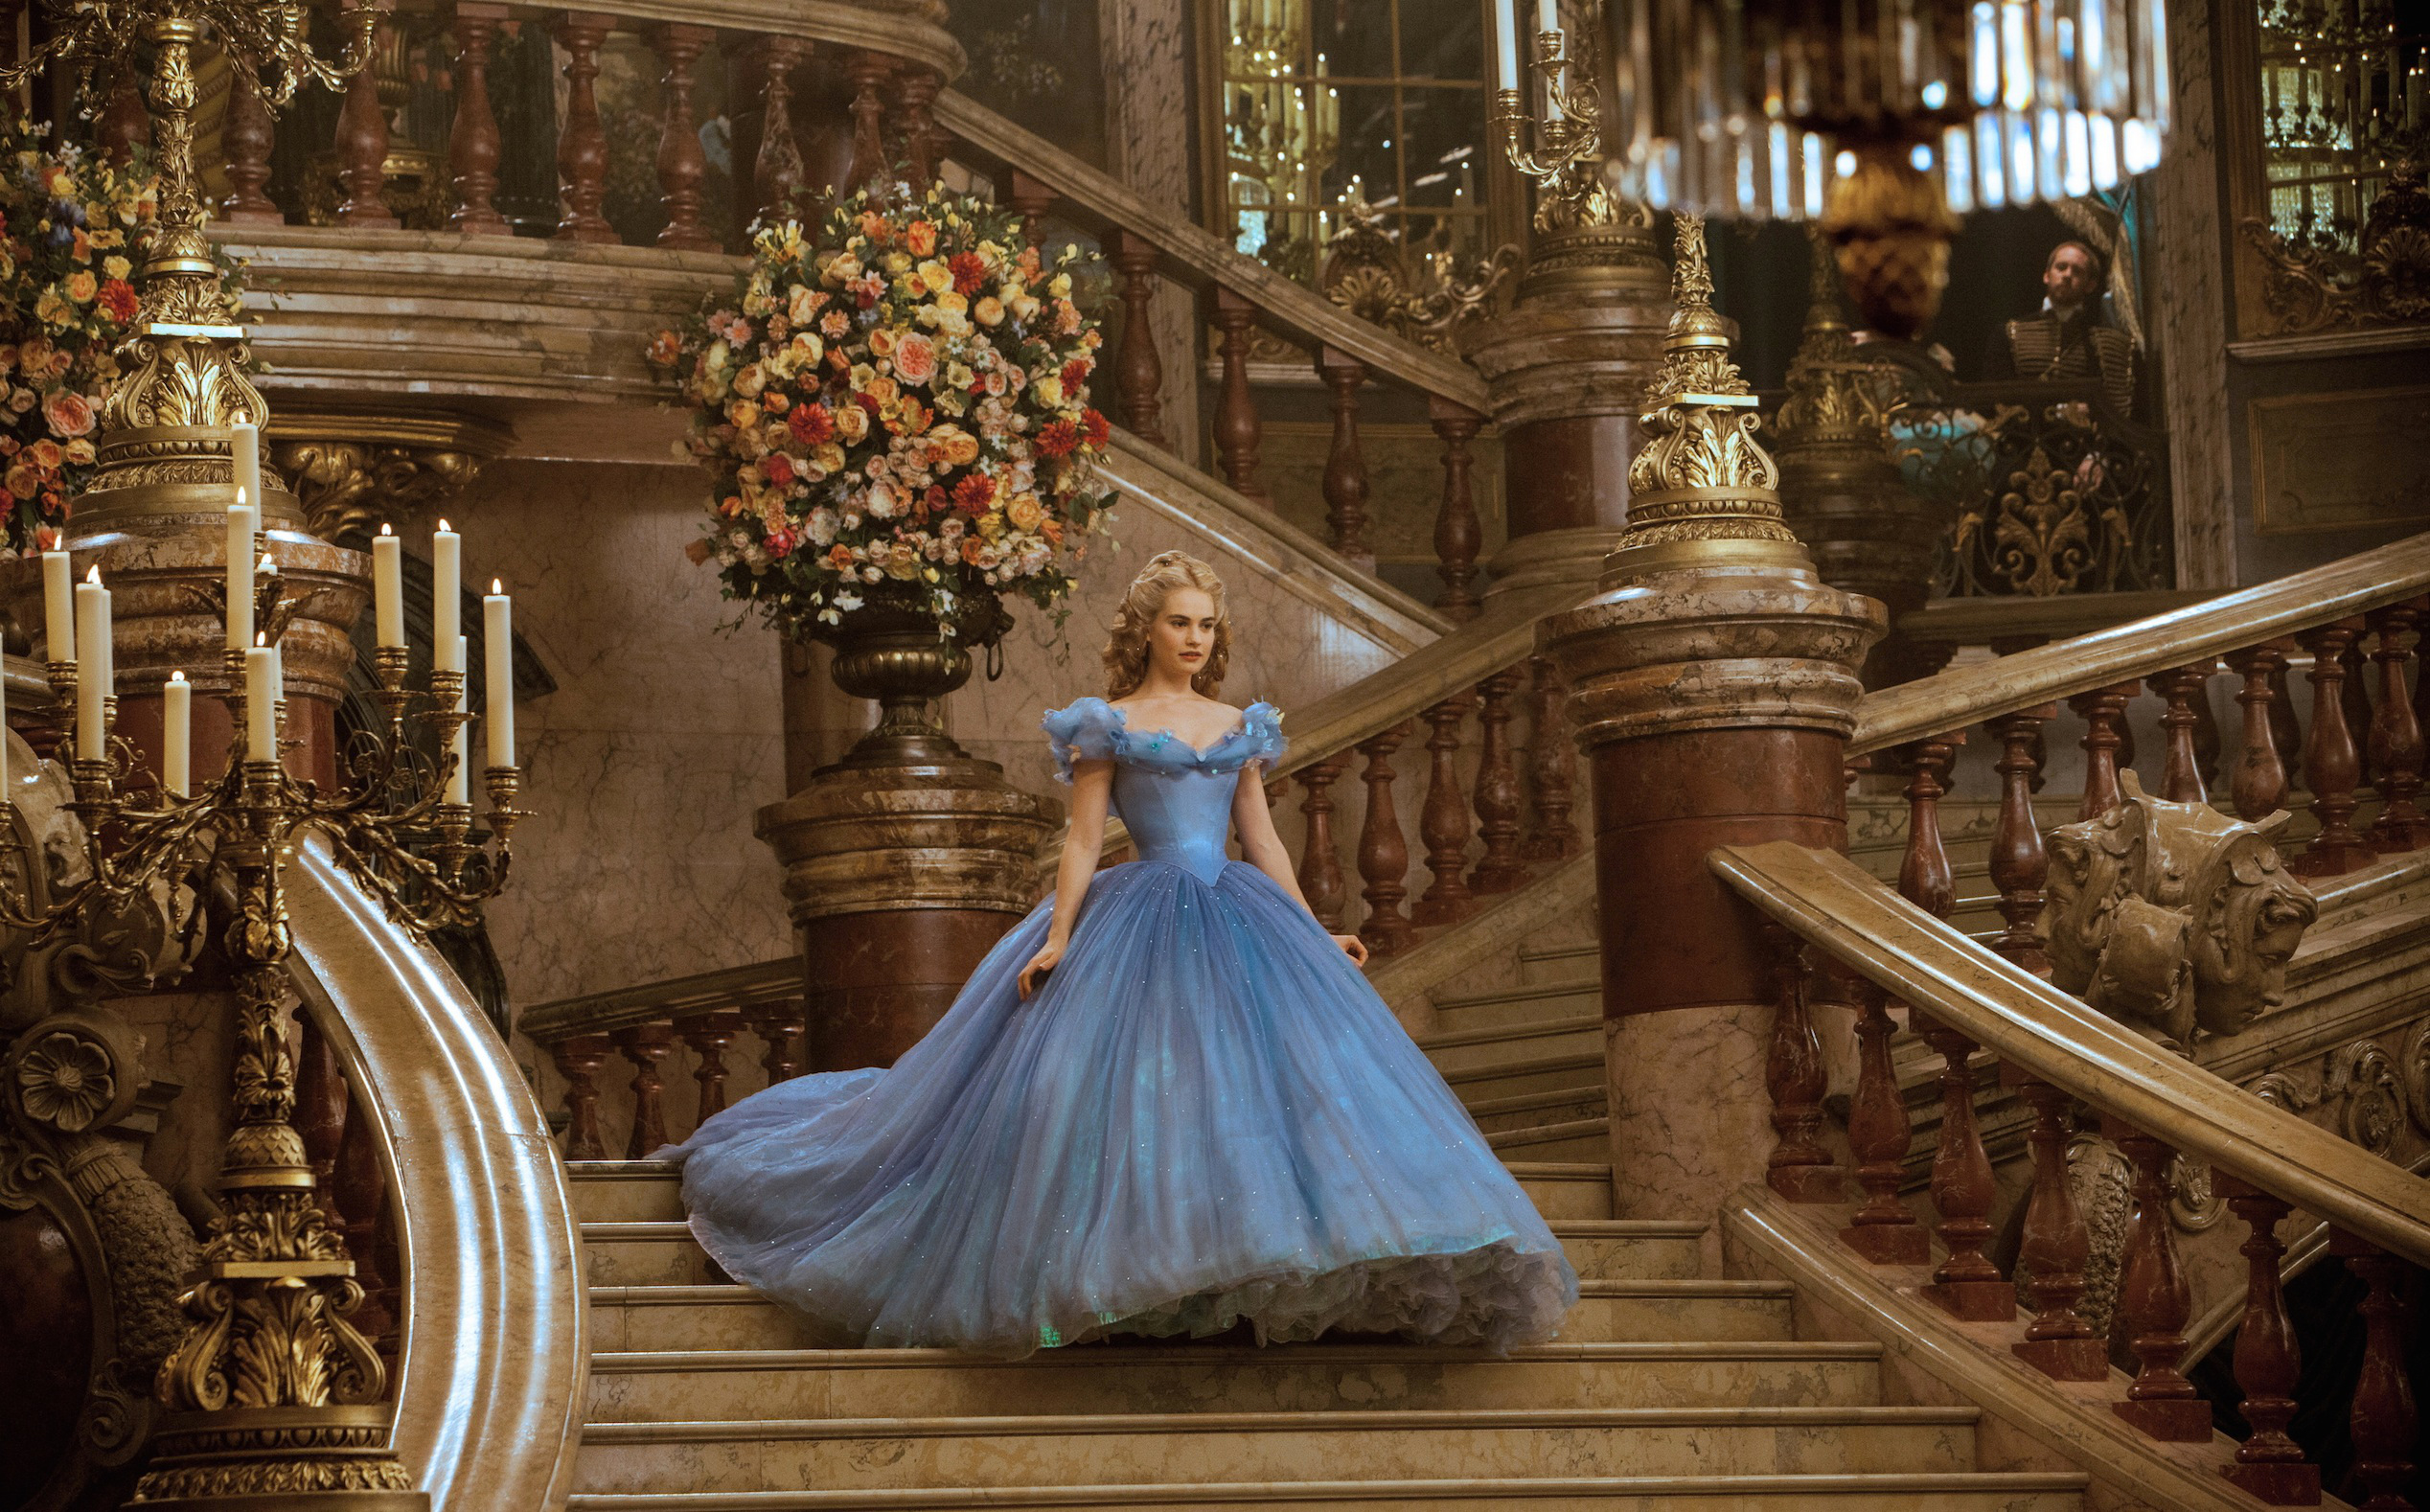 Cinderella, Official Website